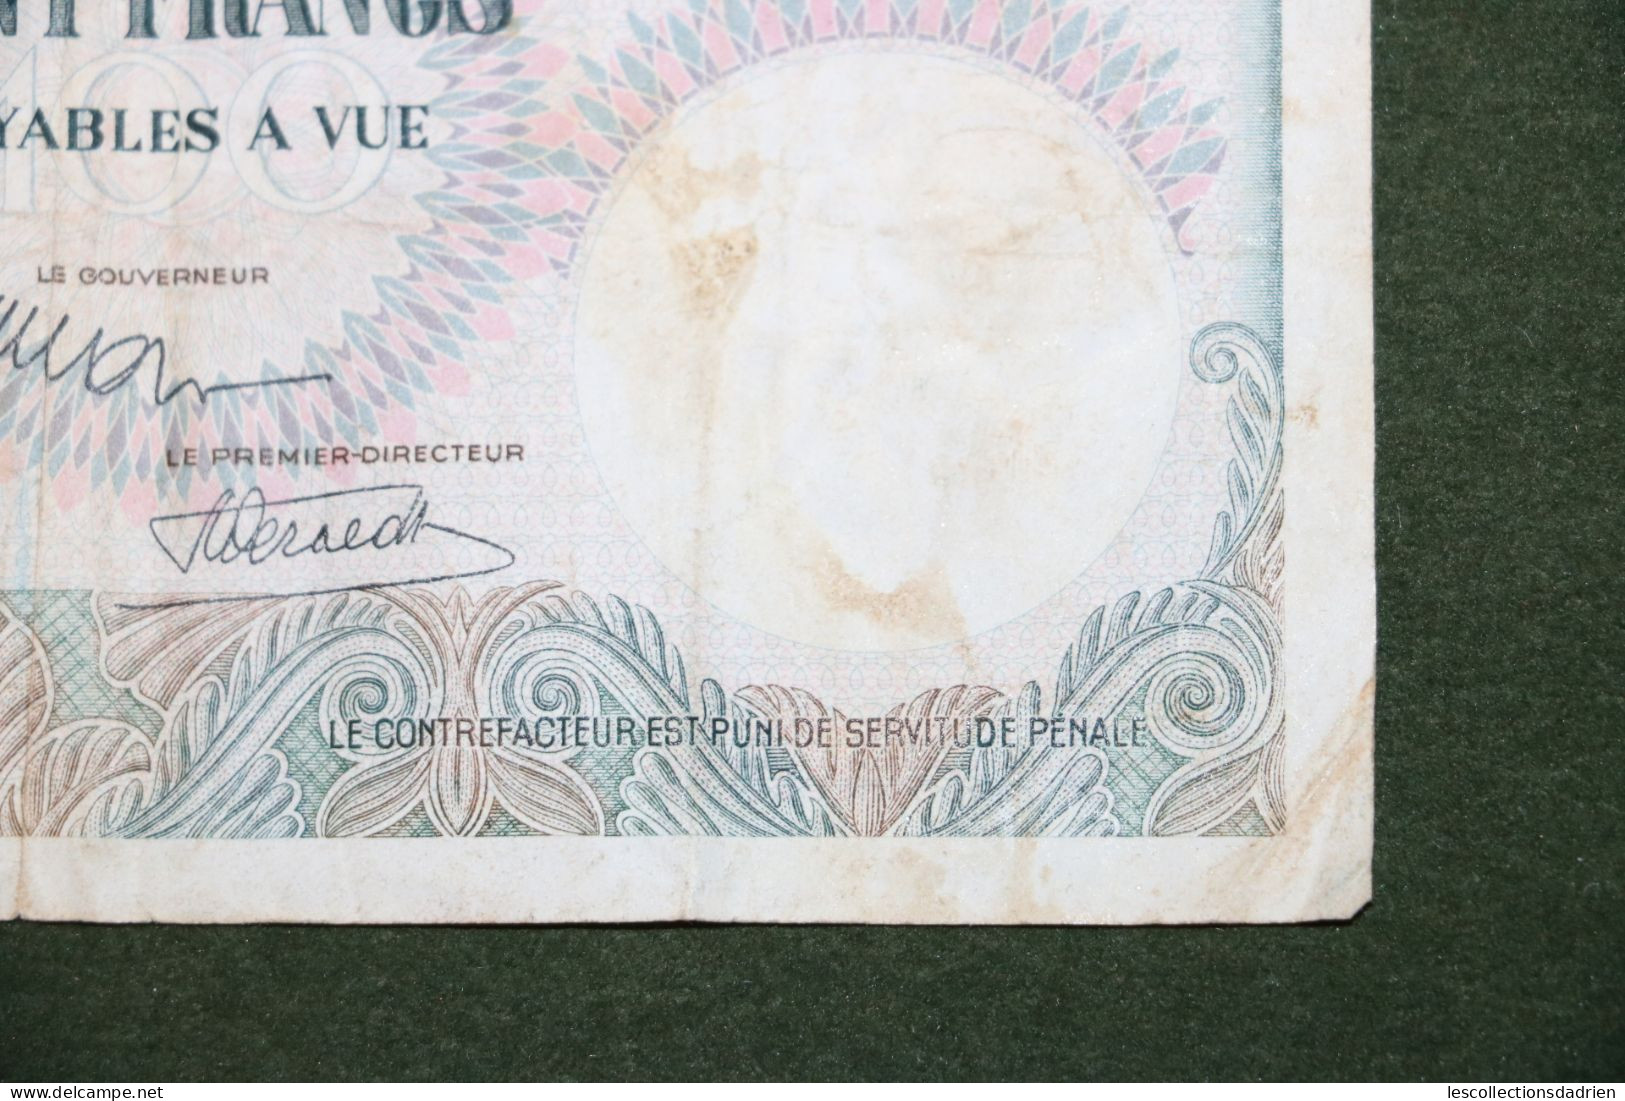 Billet De 100 Francs Congo Belge - 100 Frank Belgische Congo - Ruanda Urundi  1955 - Banknote - Banco De Congo Belga